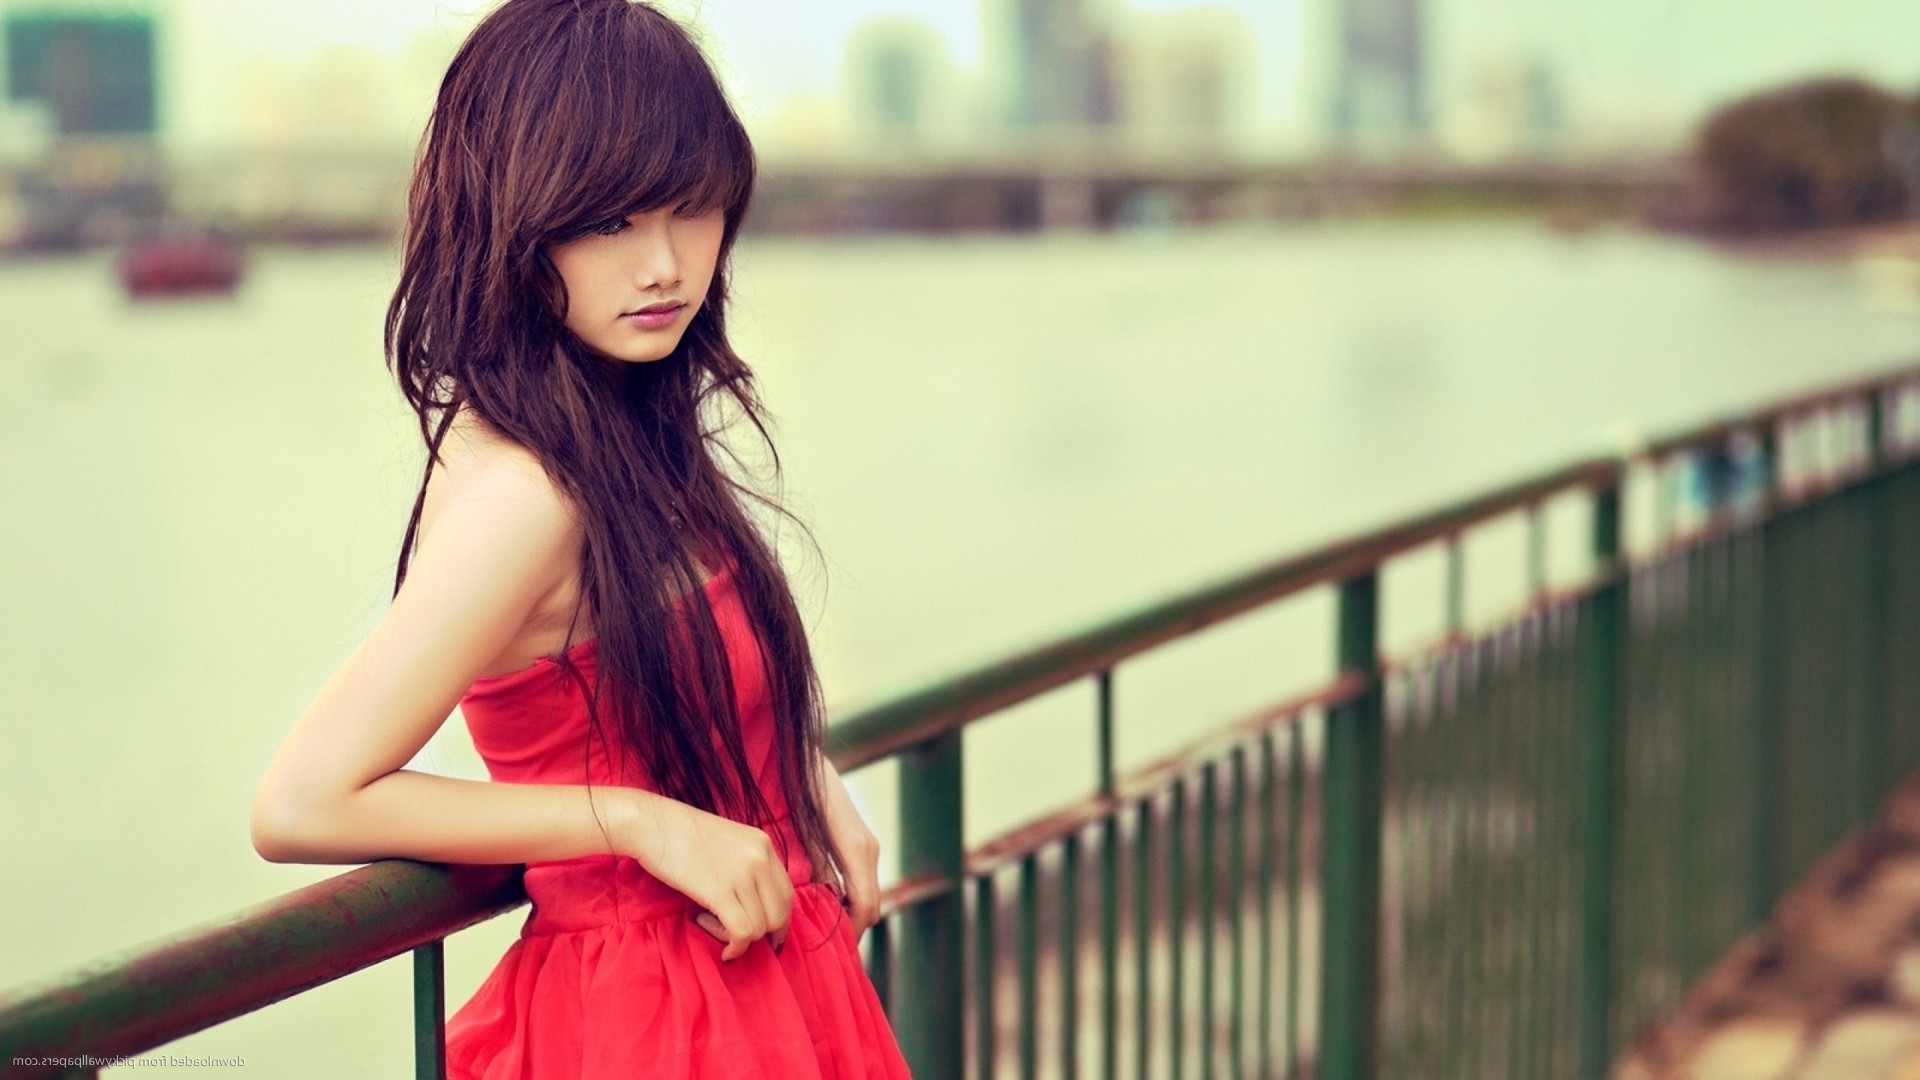 Women Model Asian Red Dress Brunette Wallpapers Hd Desktop And Mobile Backgrounds